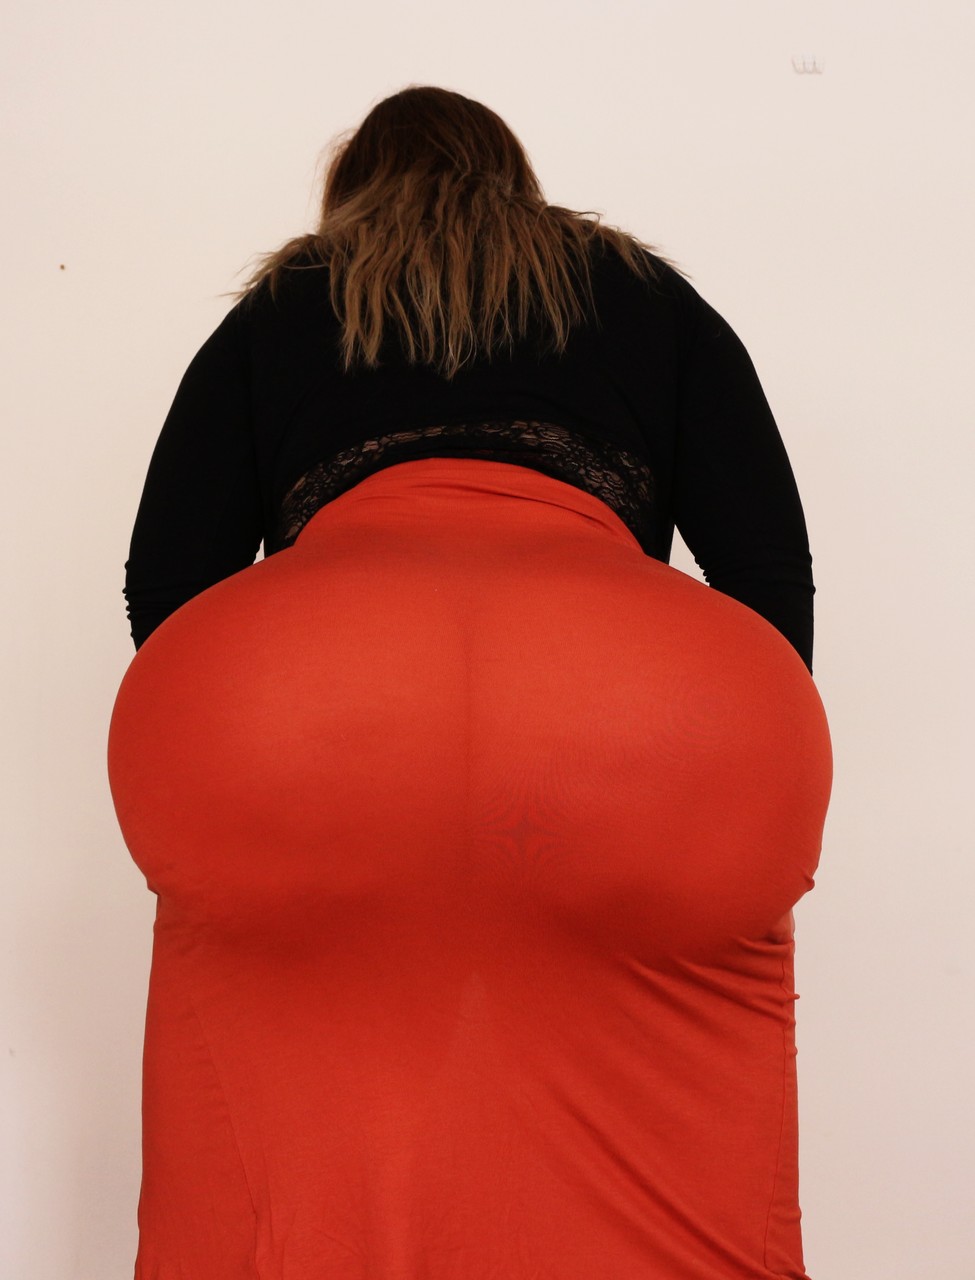 Stunning MILF fatty Natasha Crown flaunting her very big ass in a tight skirt 色情照片 #423816671 | Natasha Crown Pics, Natasha Crown, BBW, 手机色情